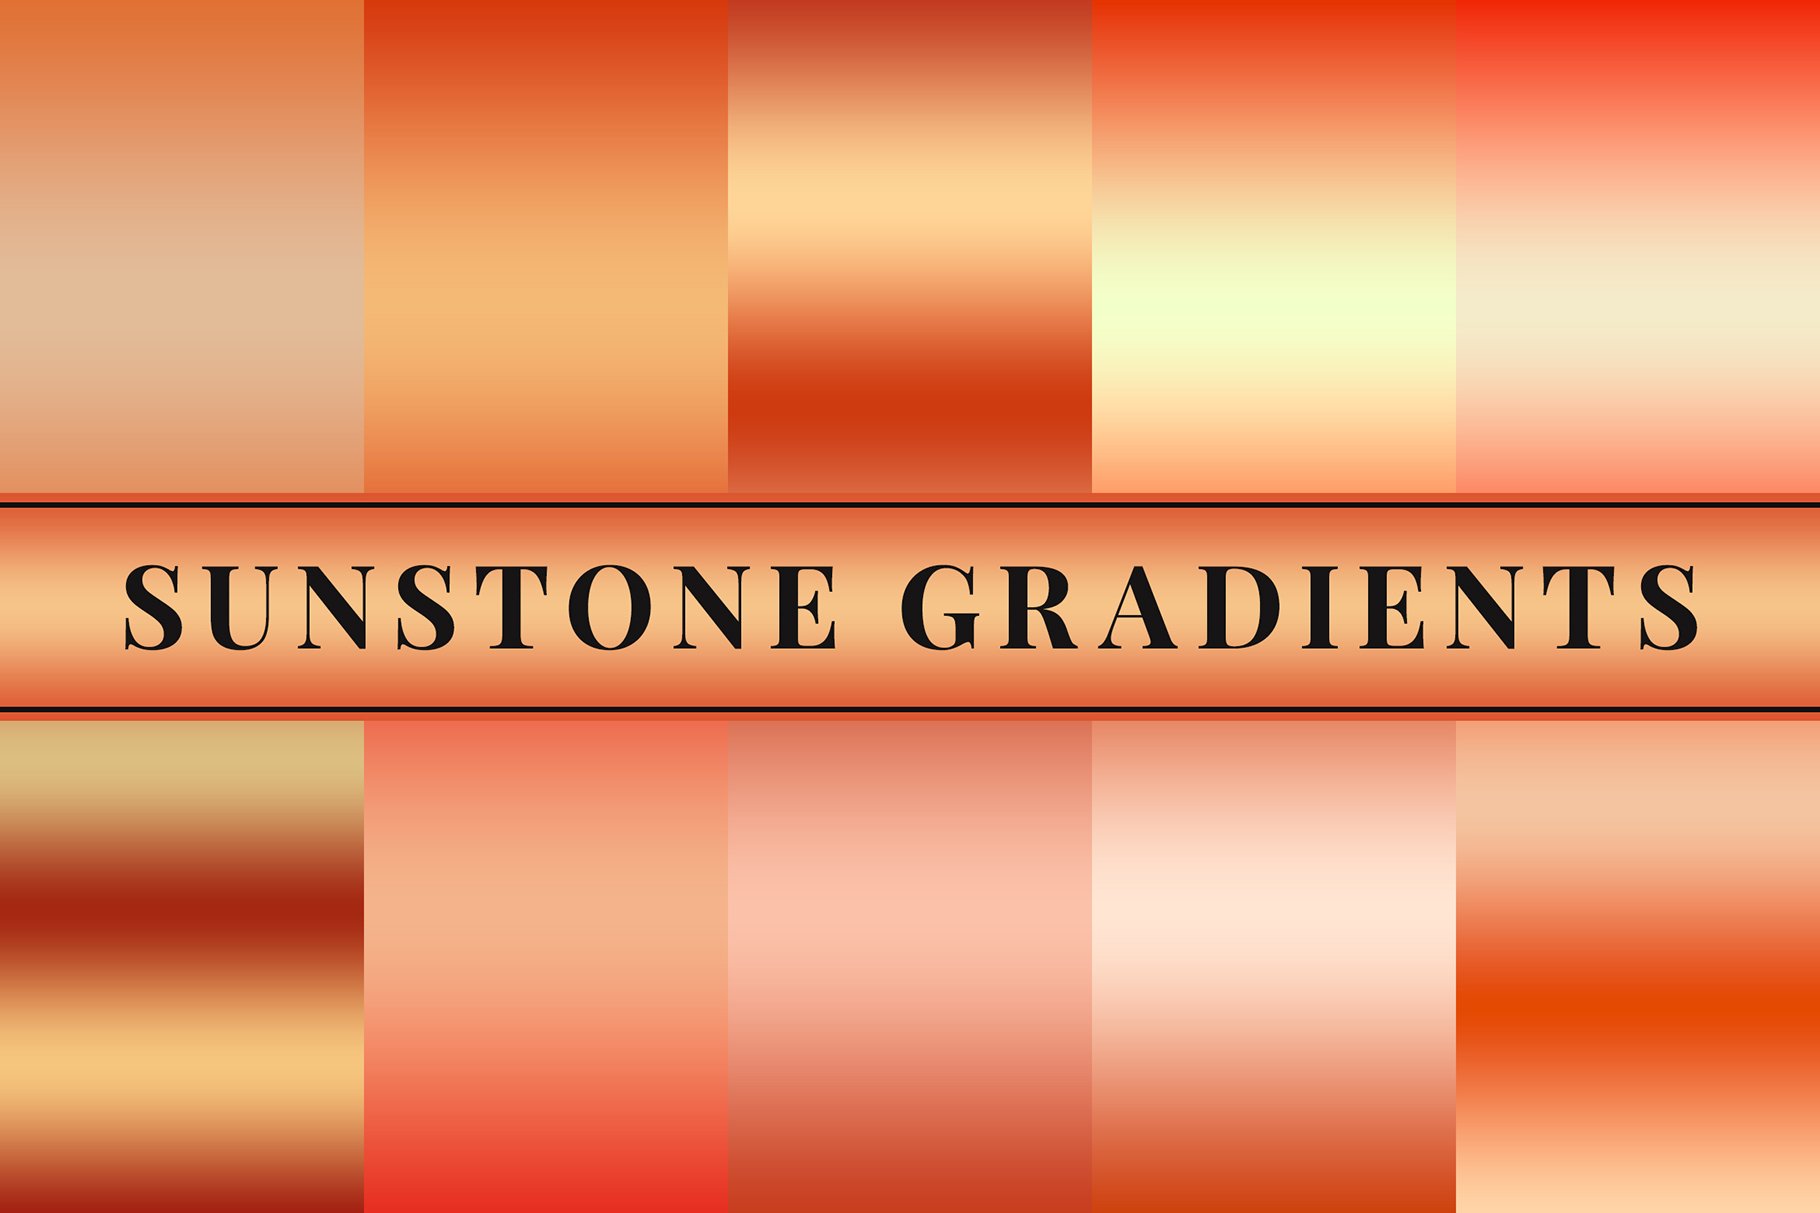 Sunstone Gradientscover image.